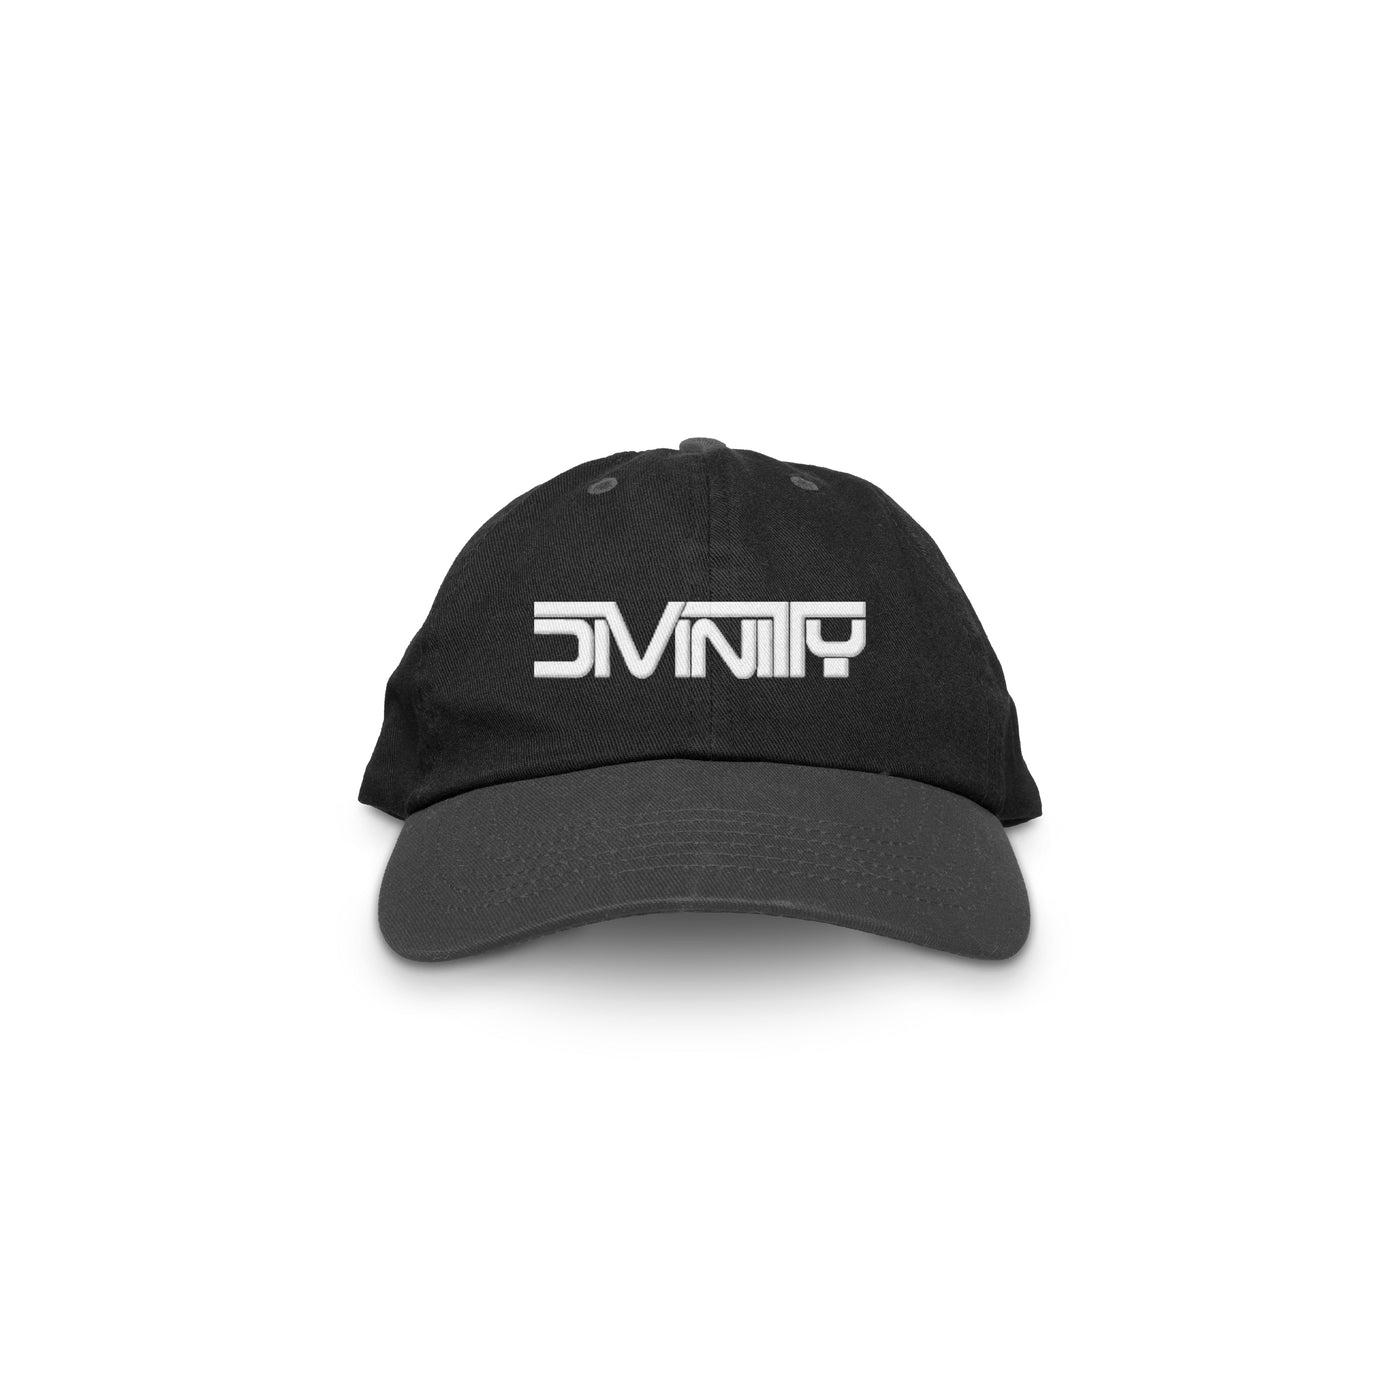 Divinity Logo Hat